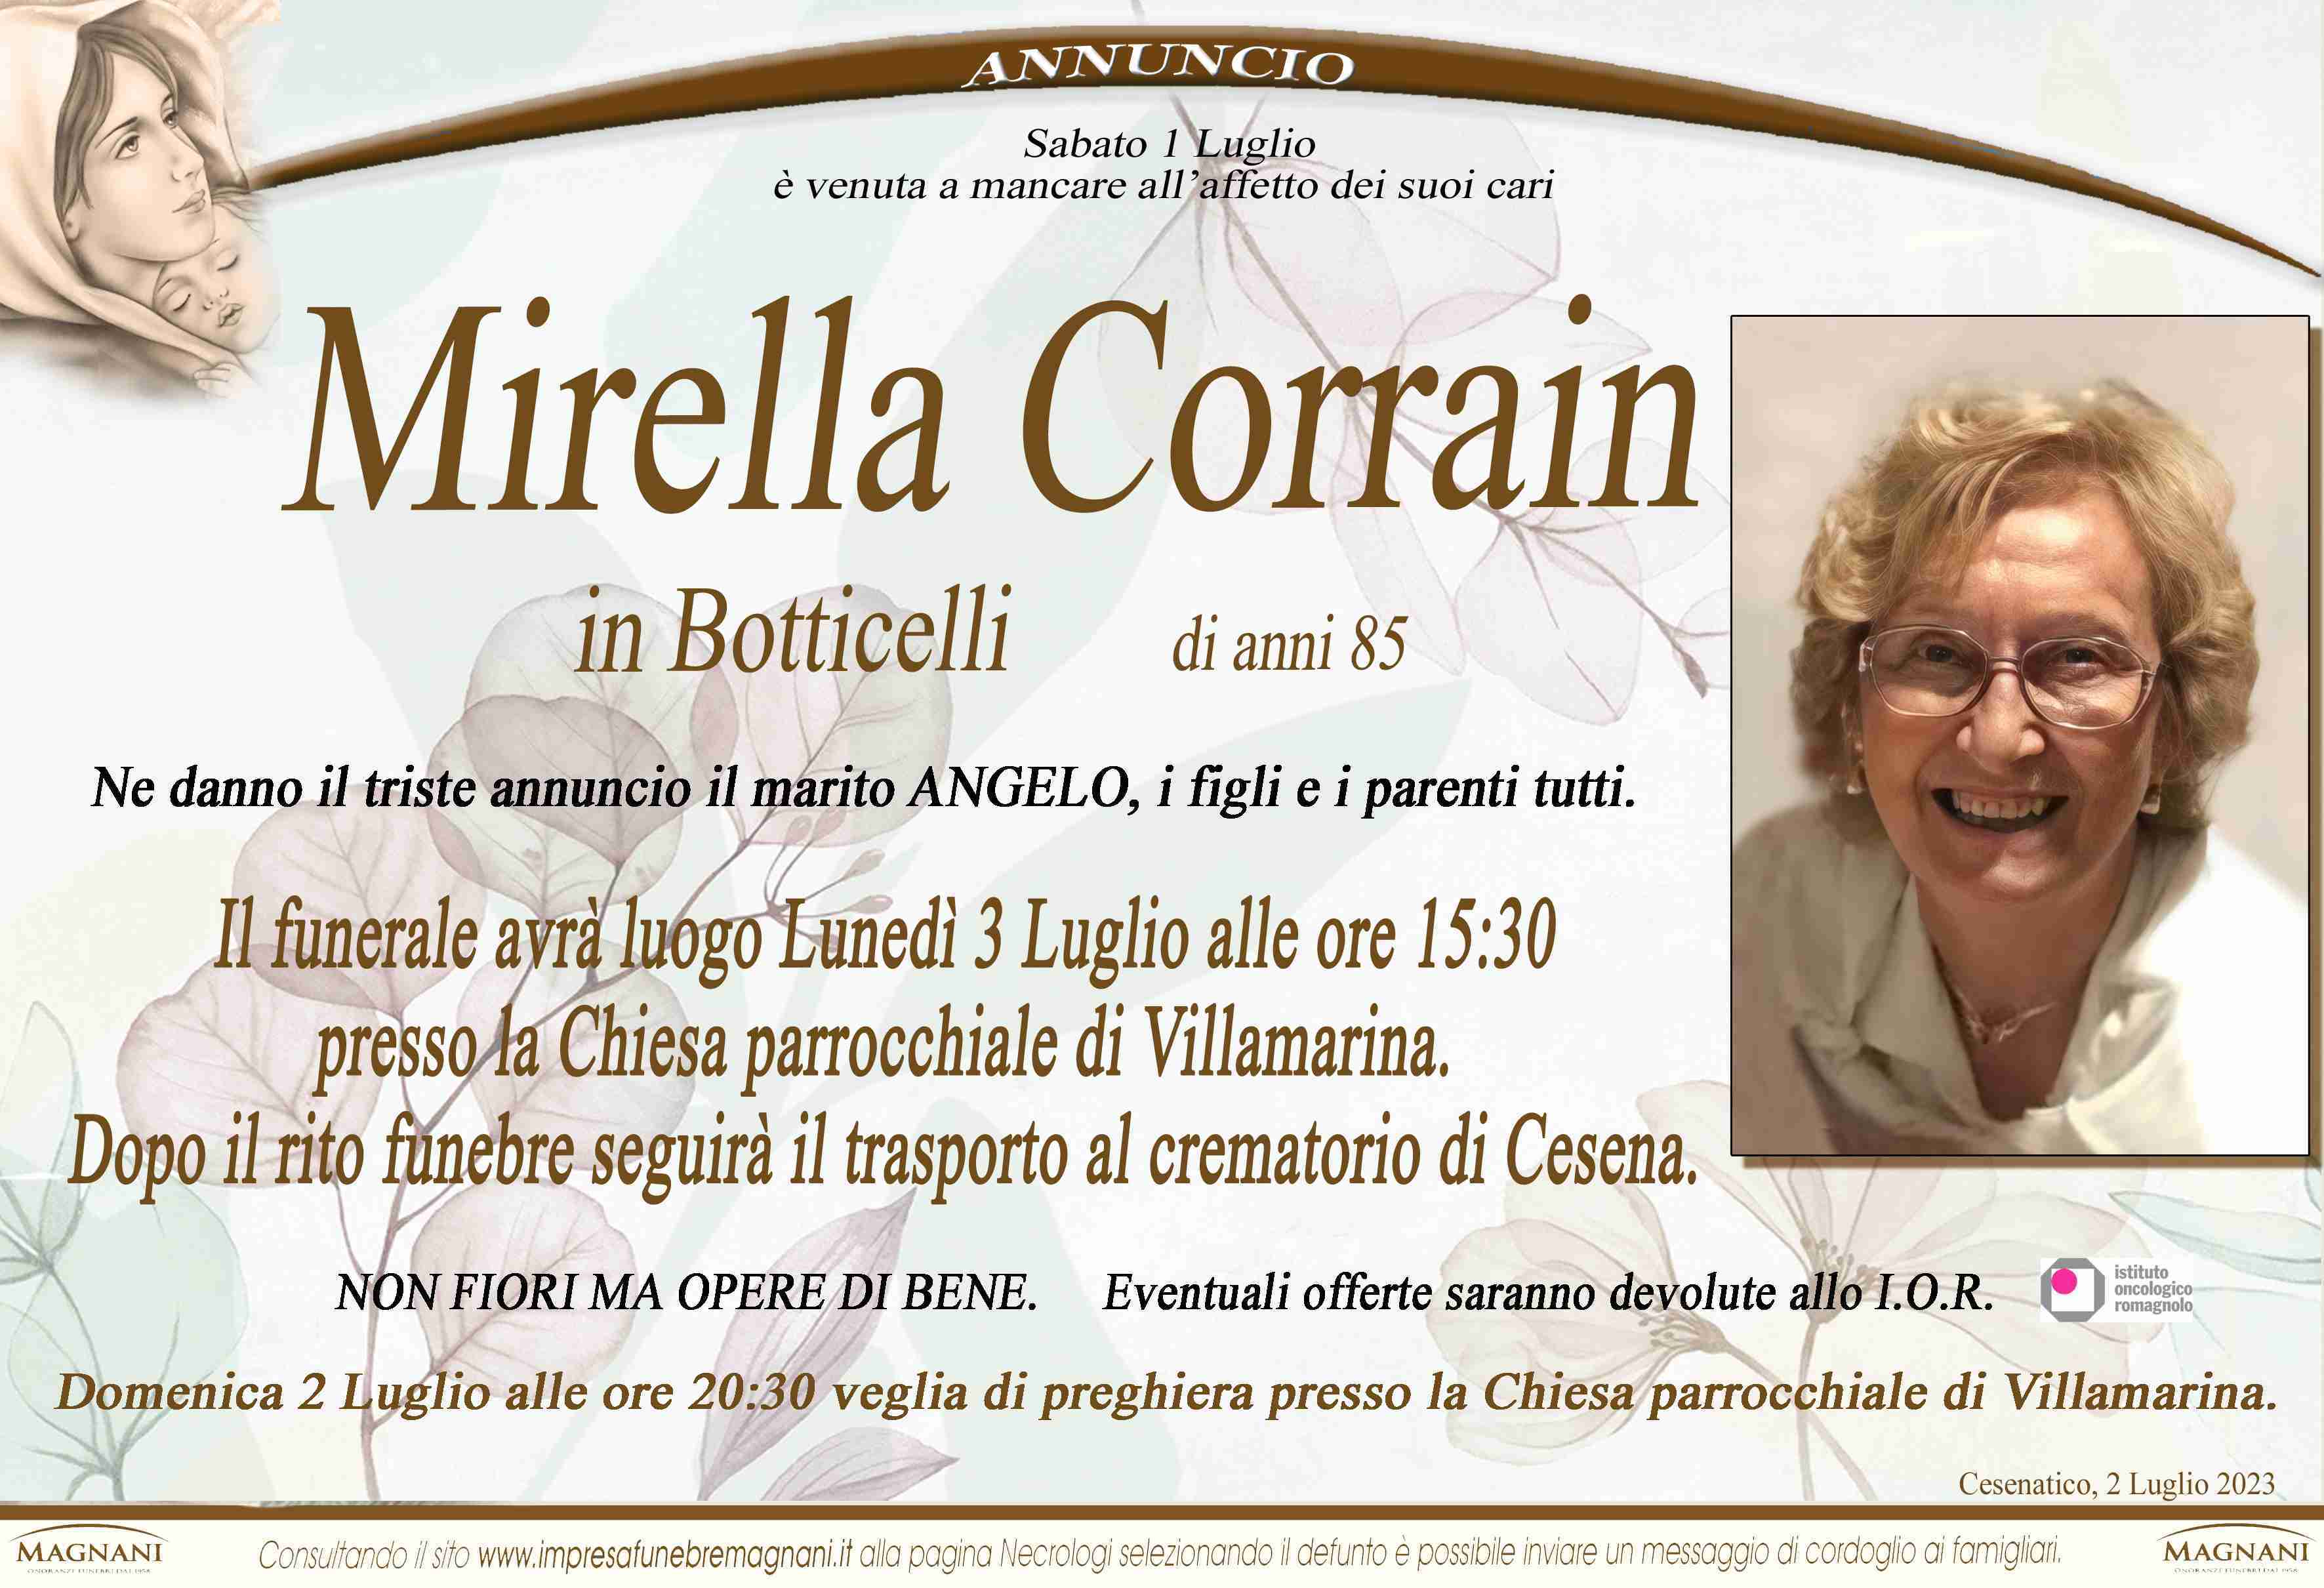 Mirella Corrain